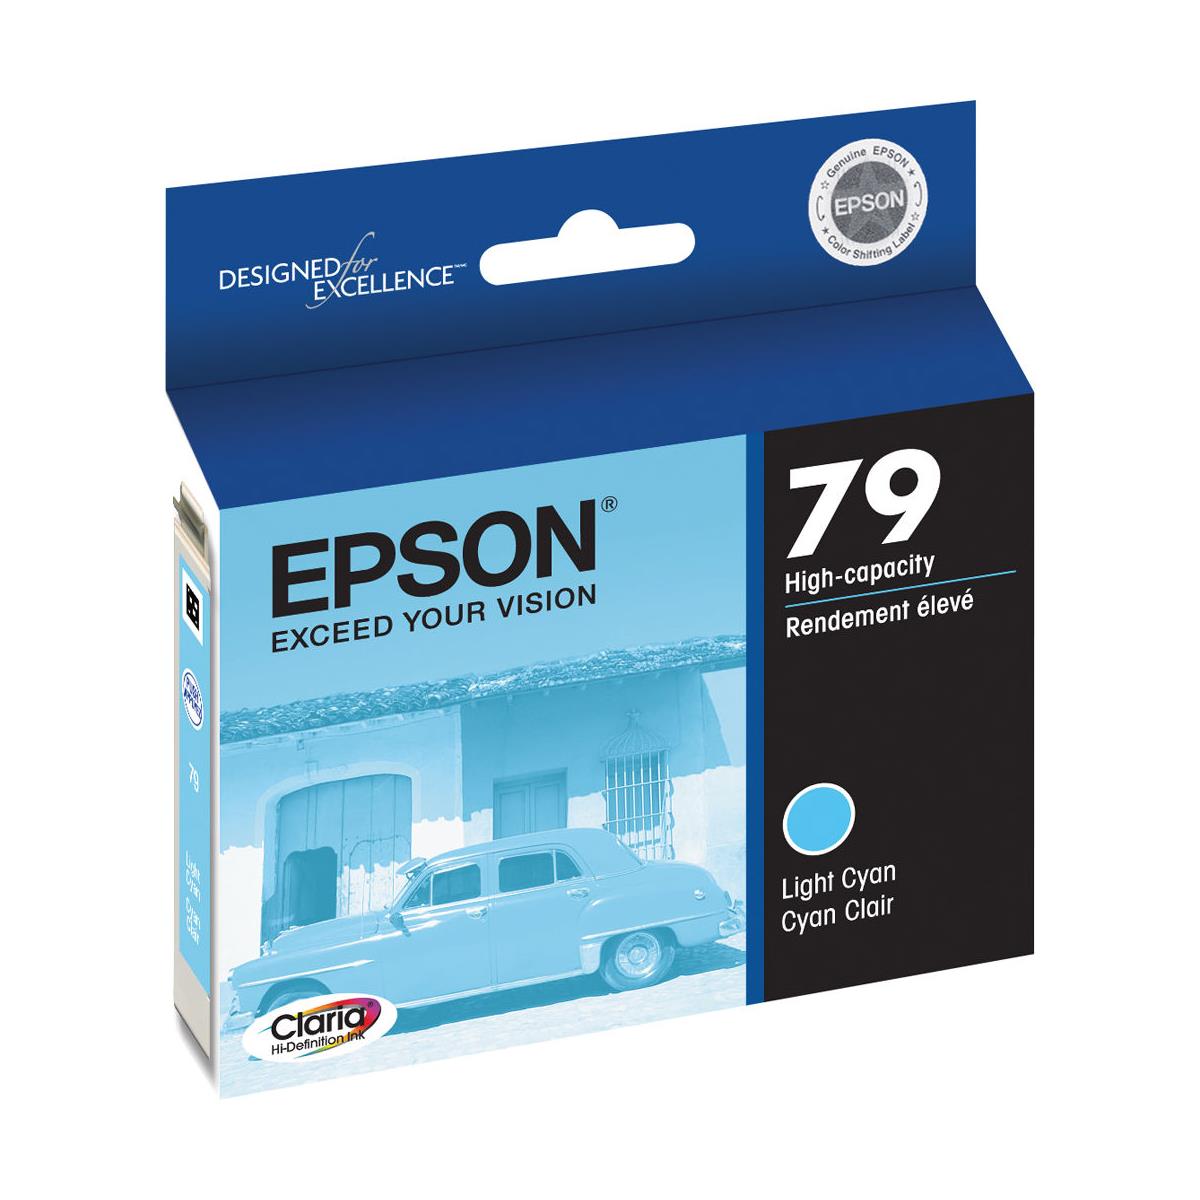 Epson T079520 #79 Light Cyan Cartridge, Stylus 1400 <b> #79 Light Cyan Ink Cartridge for the Stylus Wide Format 1400 Photo Printer </b>